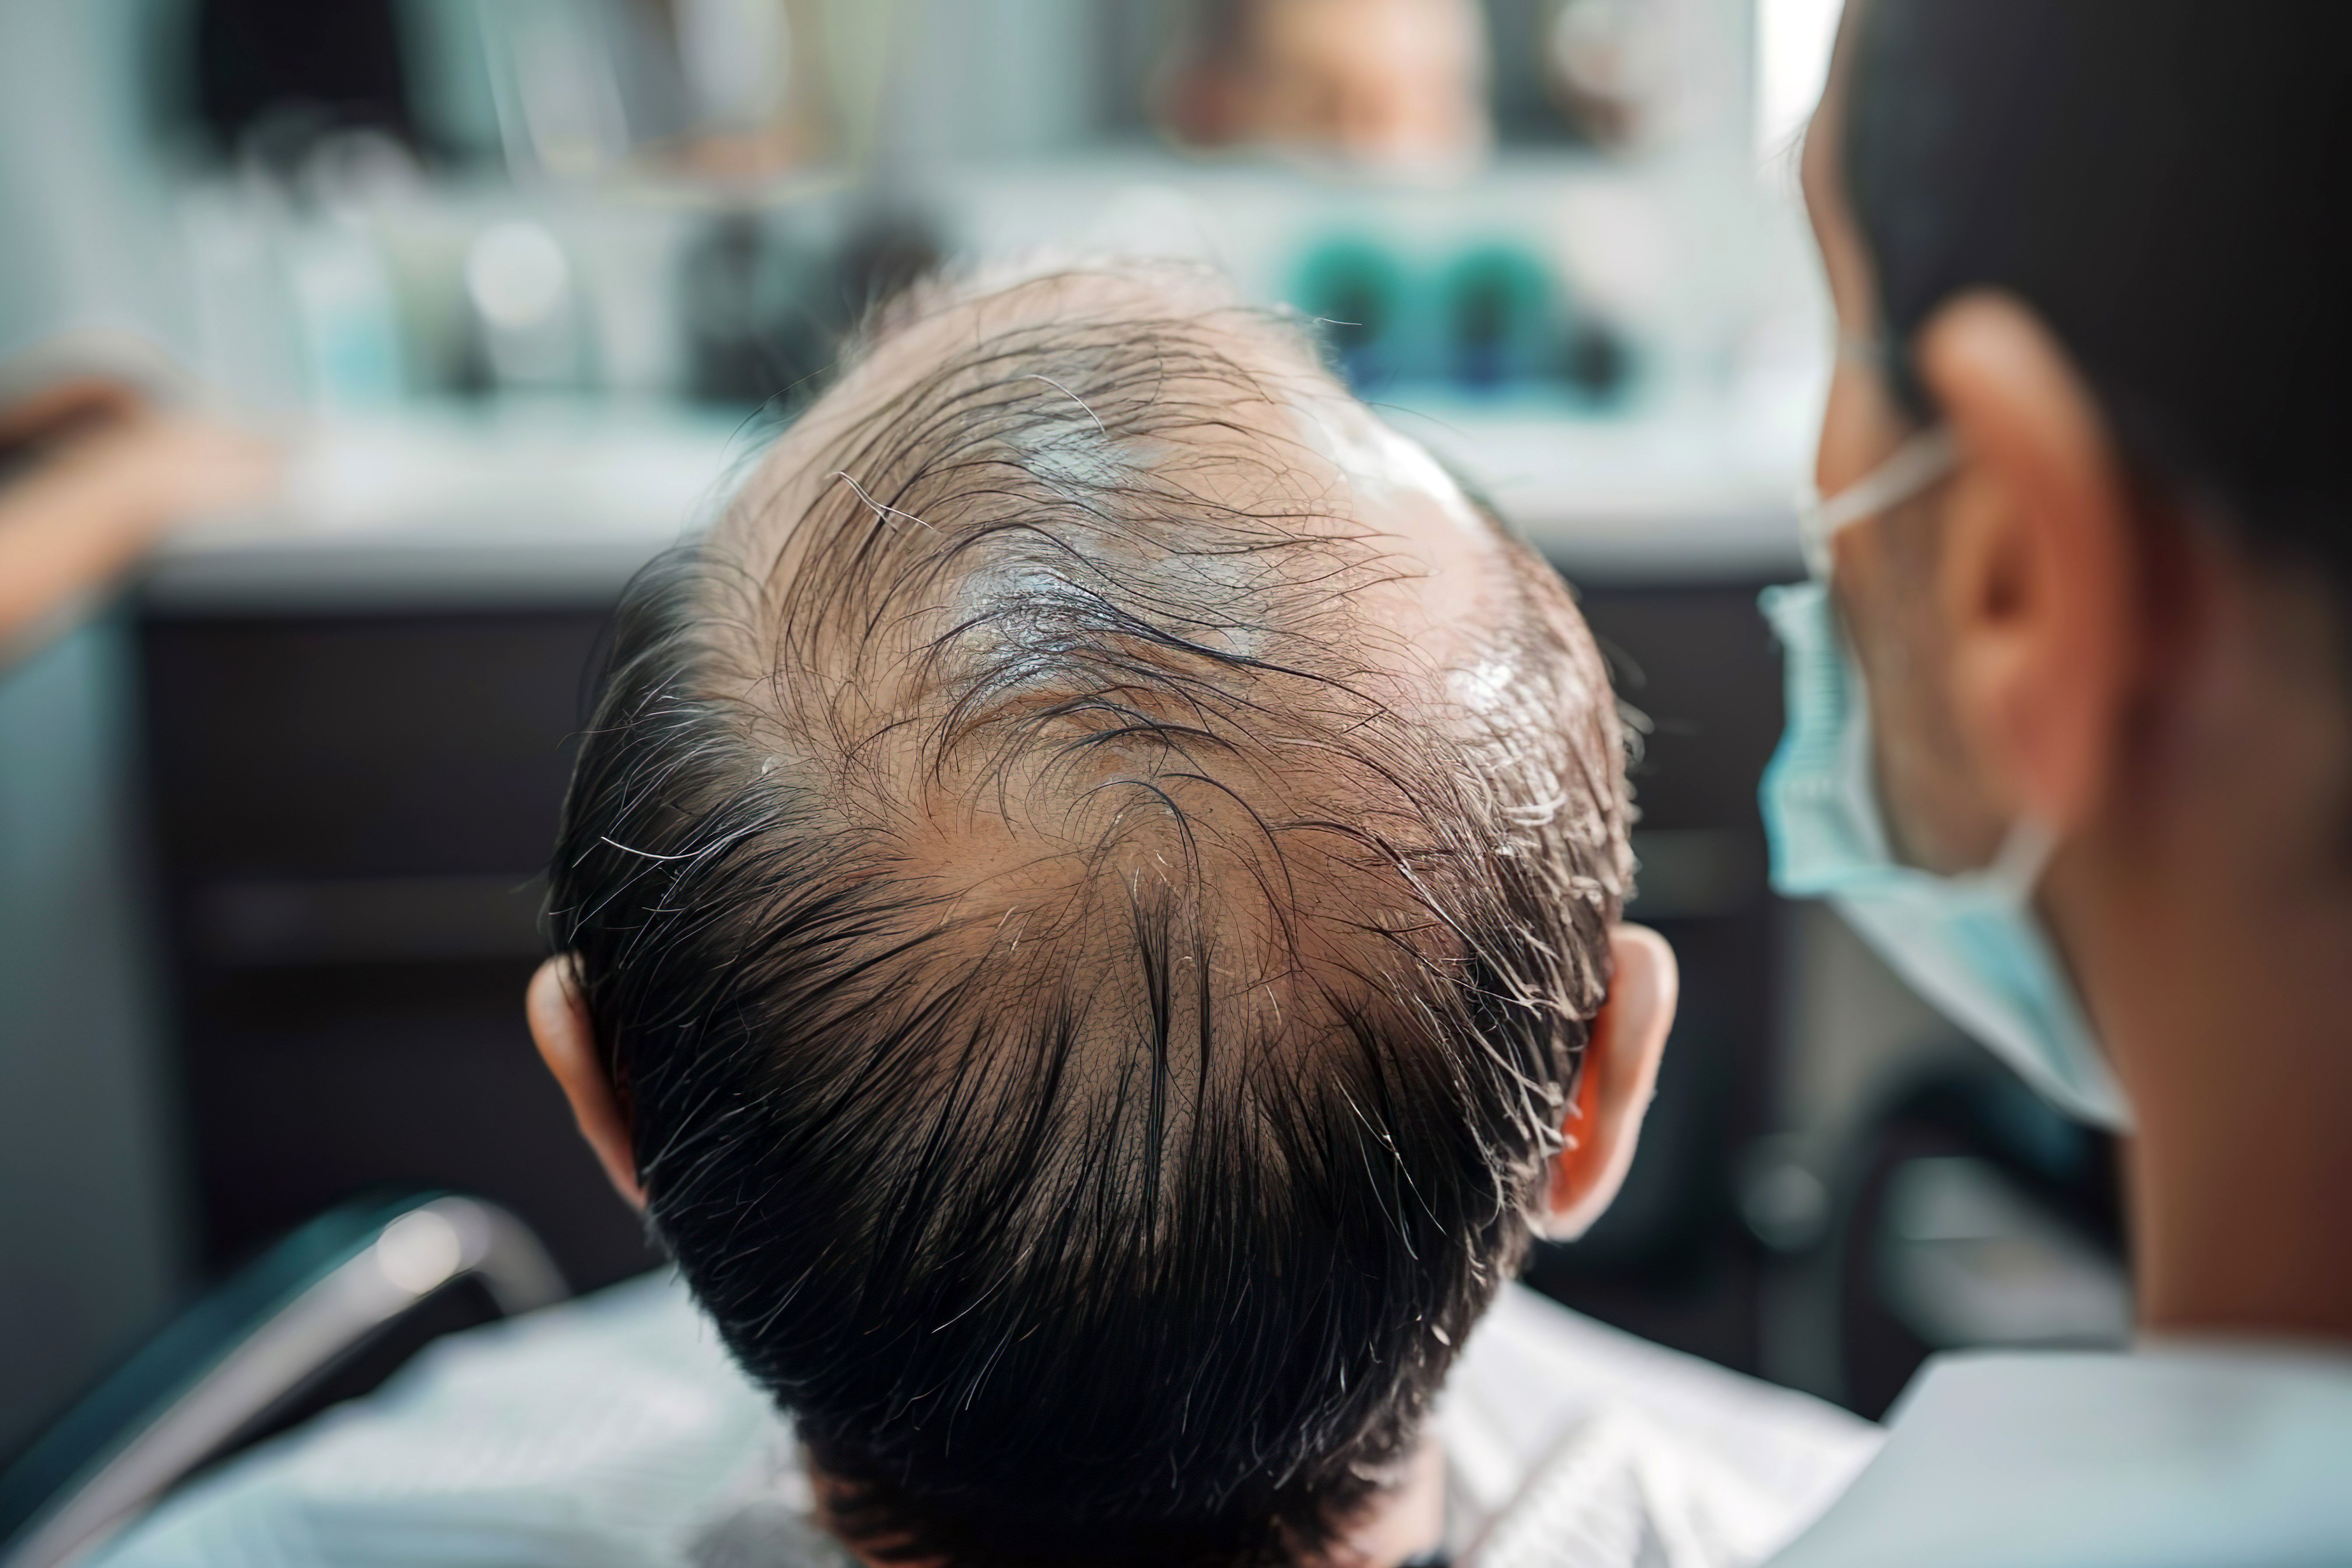 Male pattern baldness | Image Credit: Oksana - stock.adobe.com